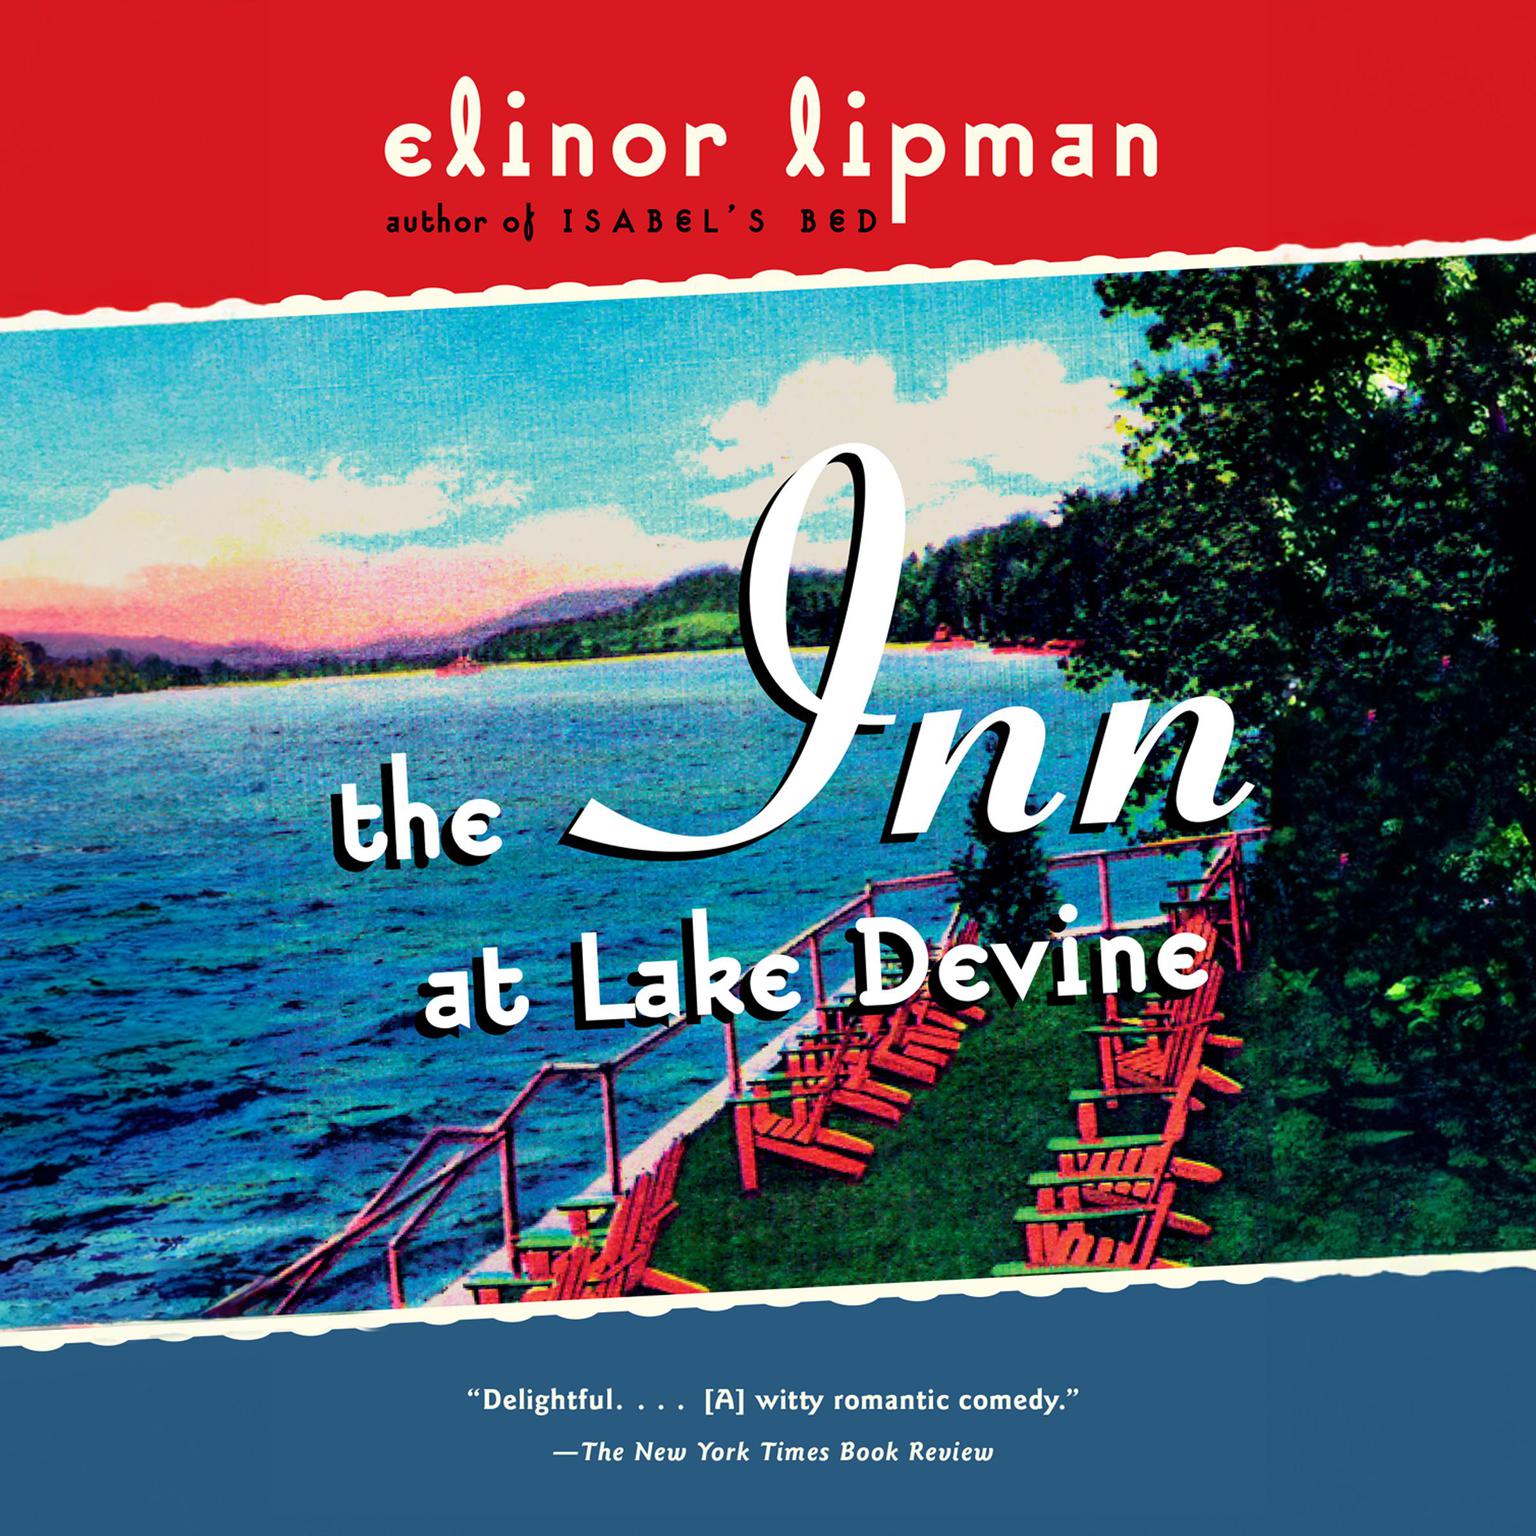 The Inn at Lake Devine Audiobook, by Elinor Lipman